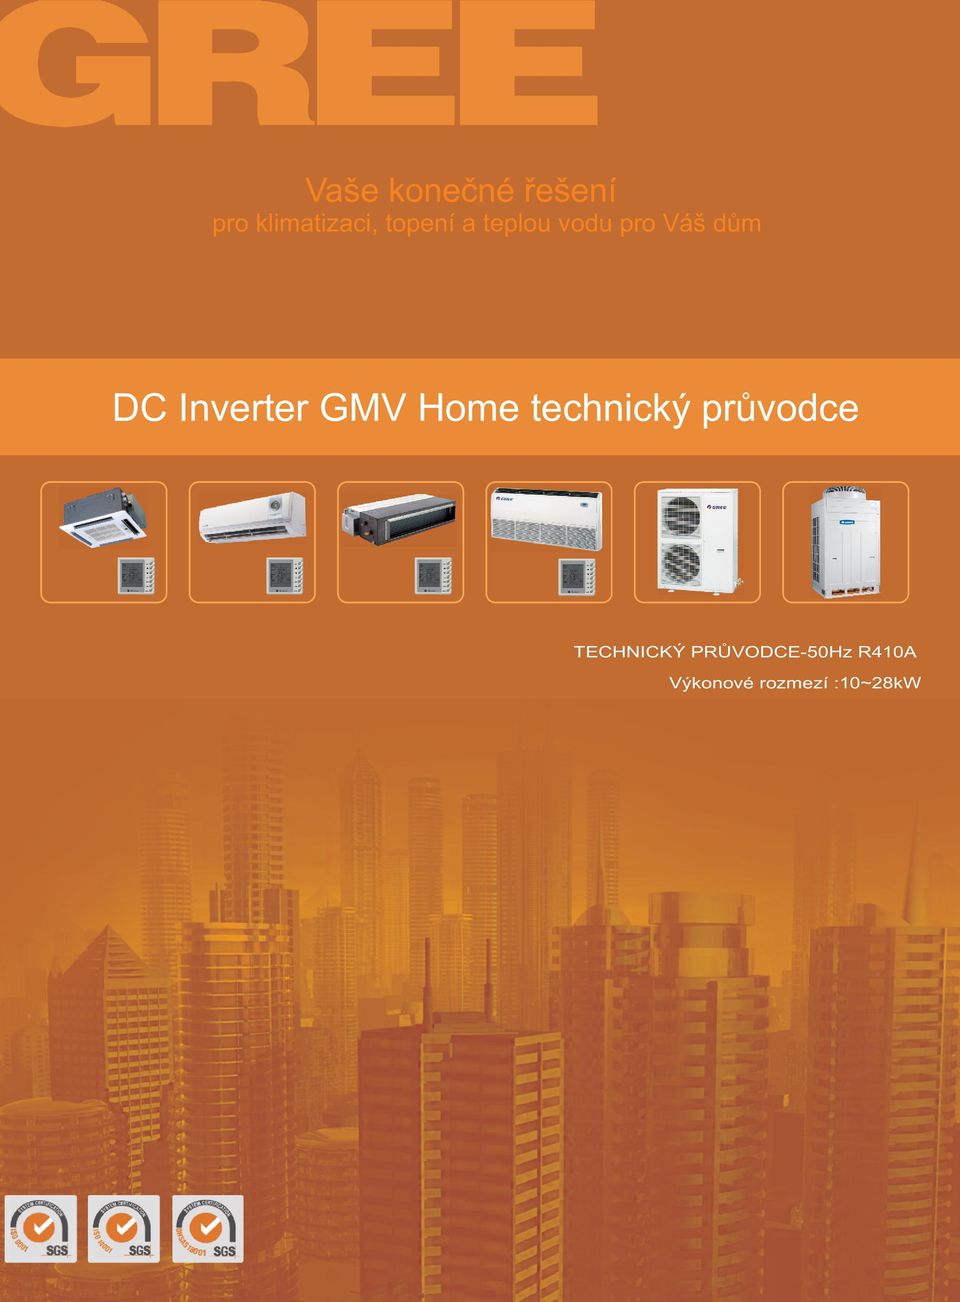 Inverter GMV Home technický prùvodce